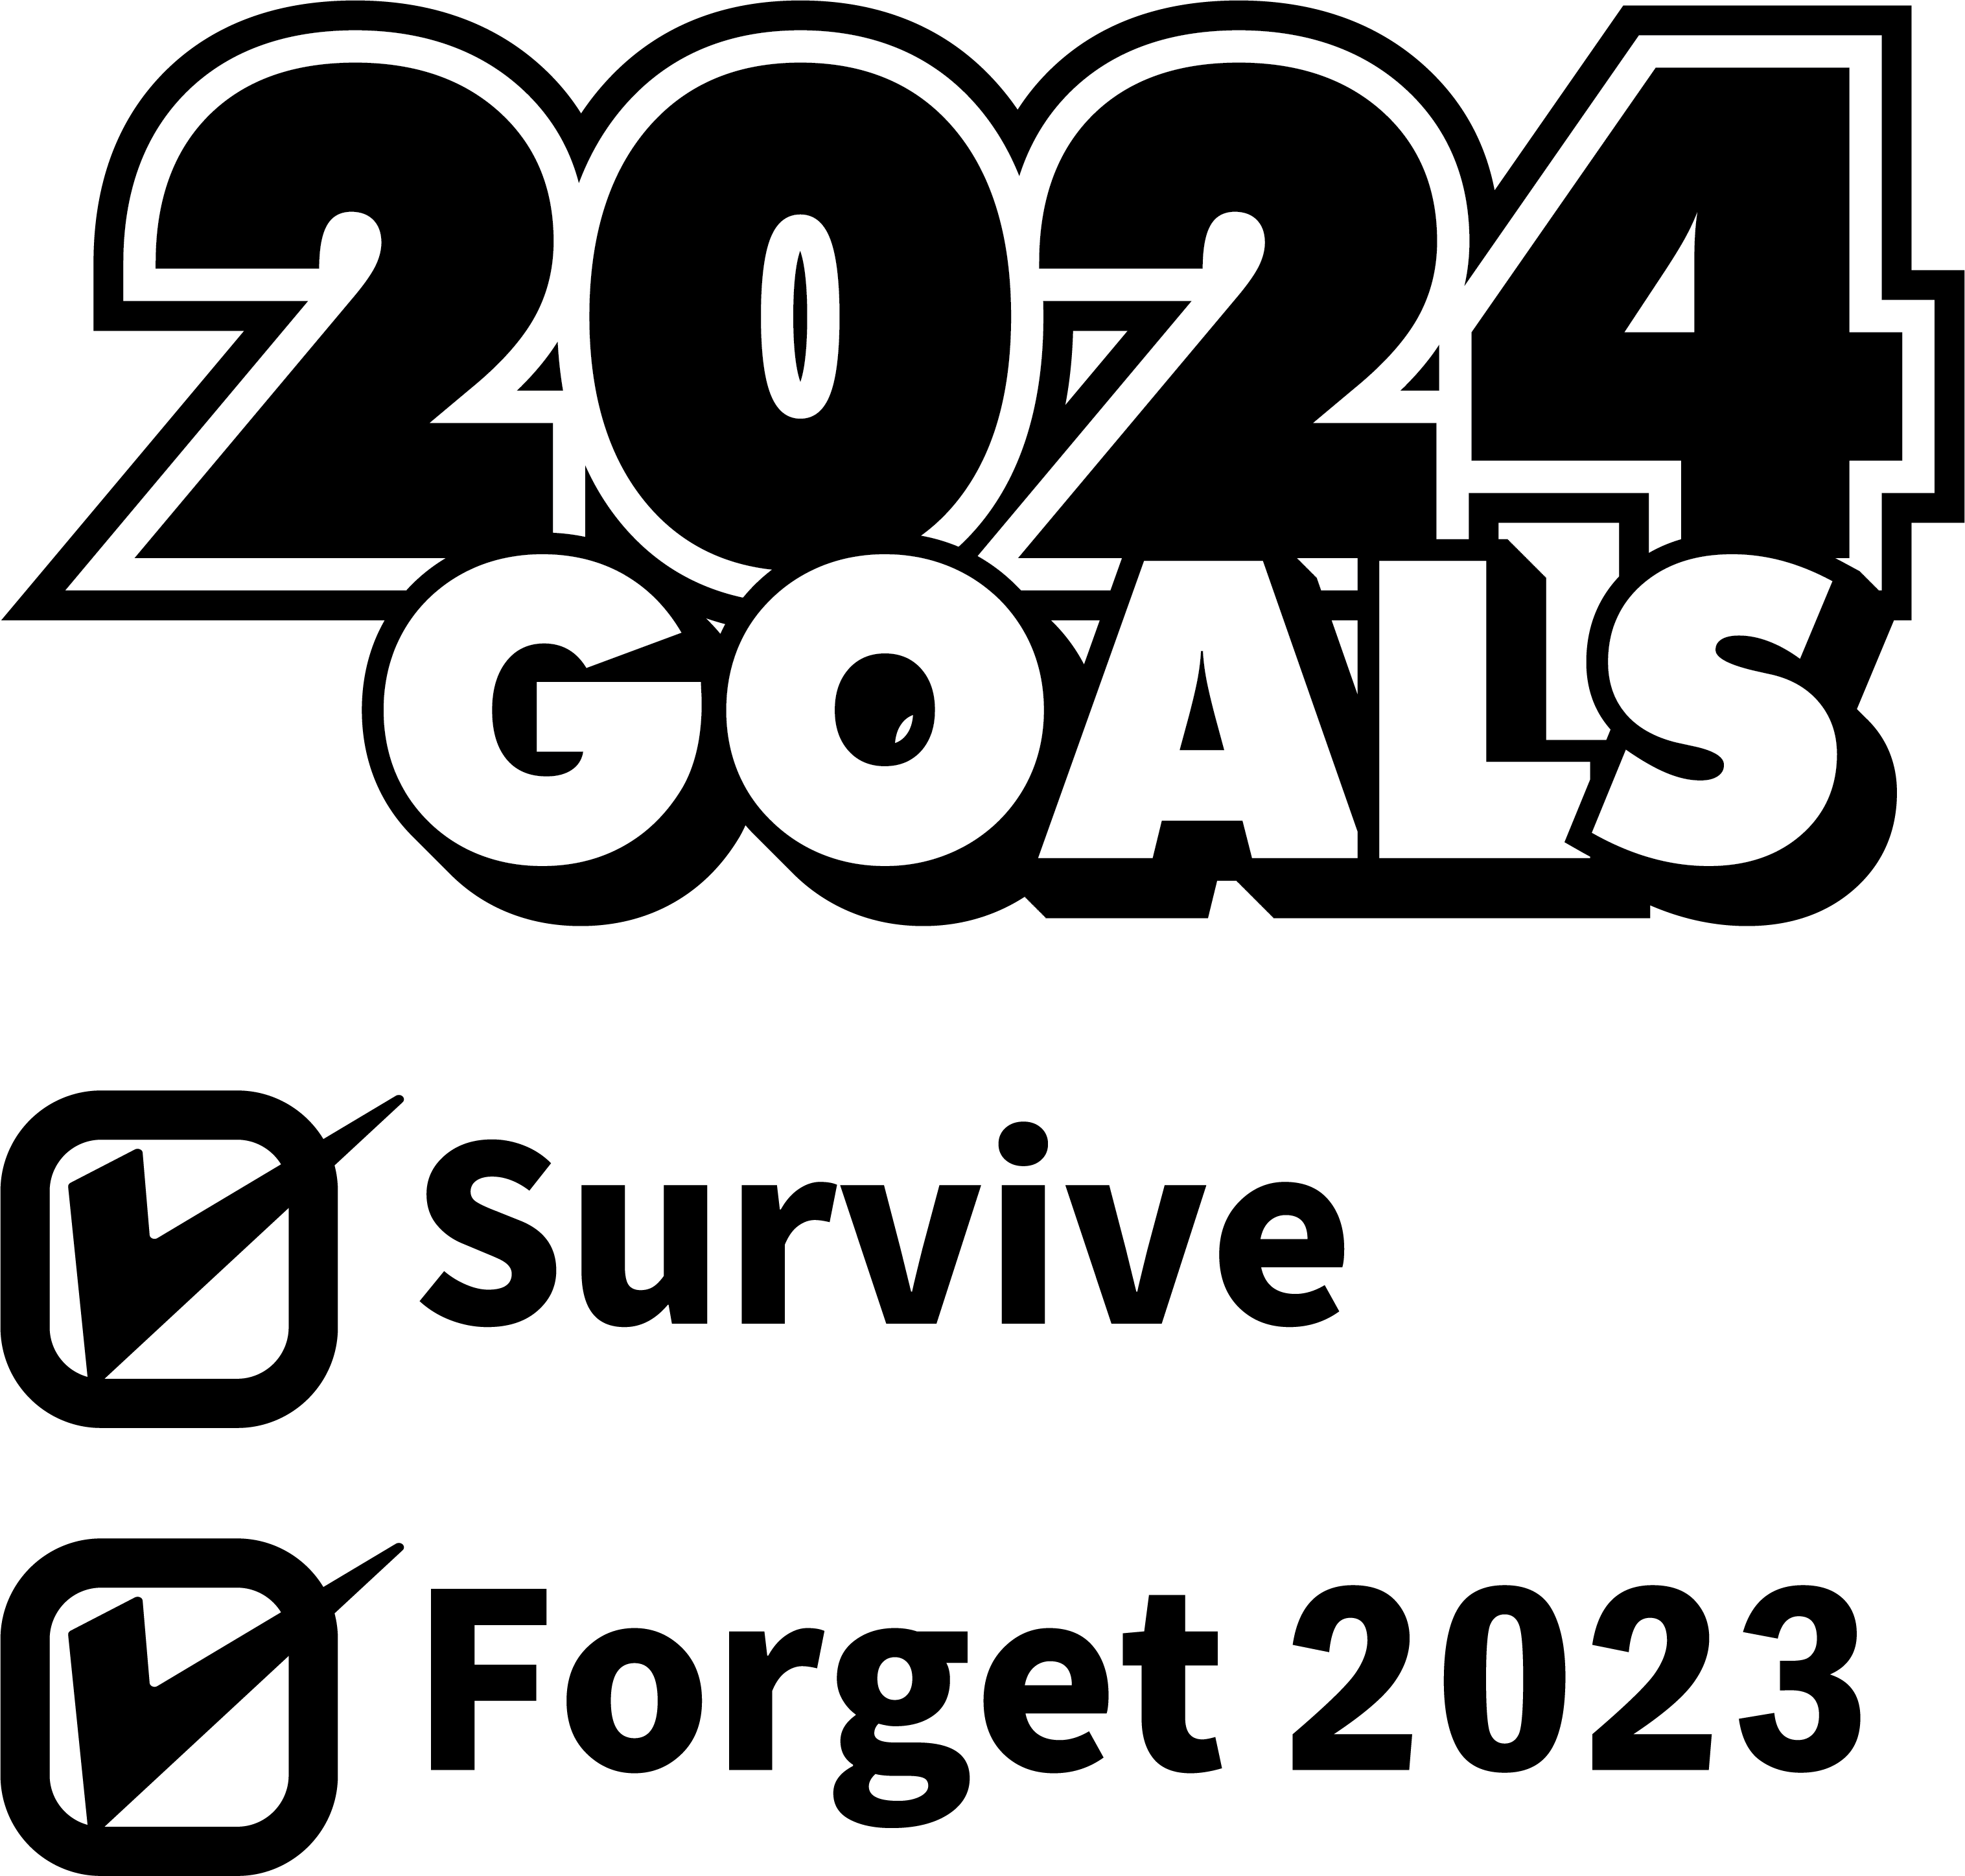 06 2024 GOALS